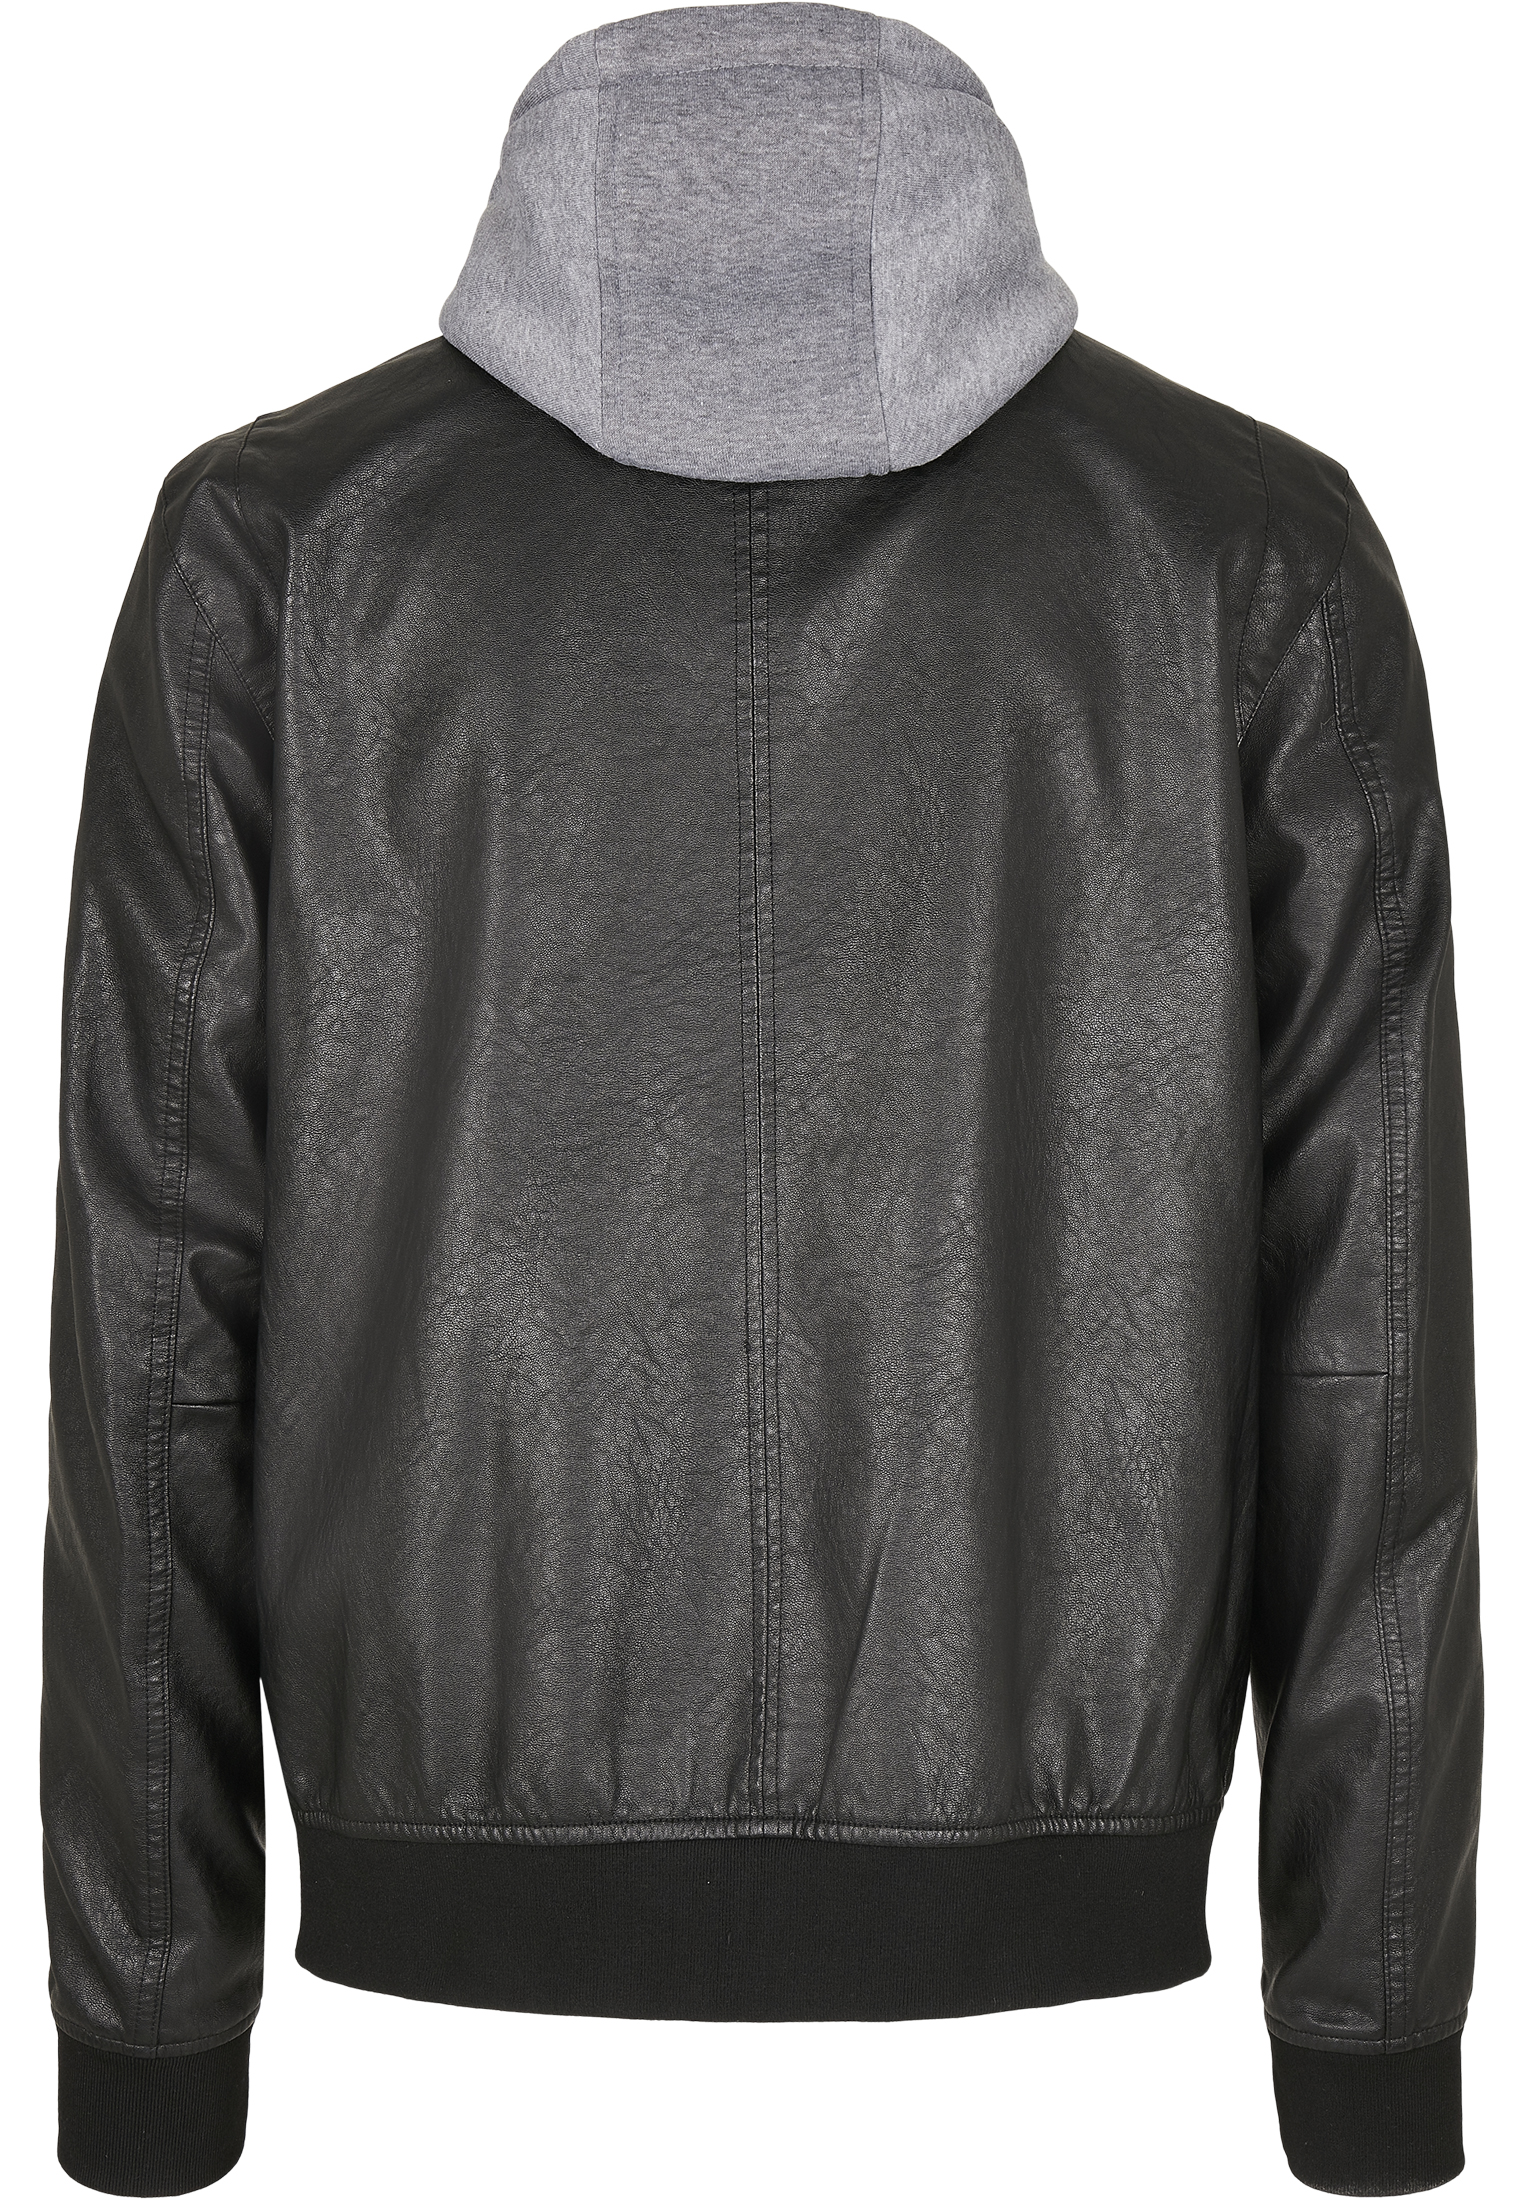 Light Jackets Fleece Hooded Fake Leather Jacket in Farbe black/grey